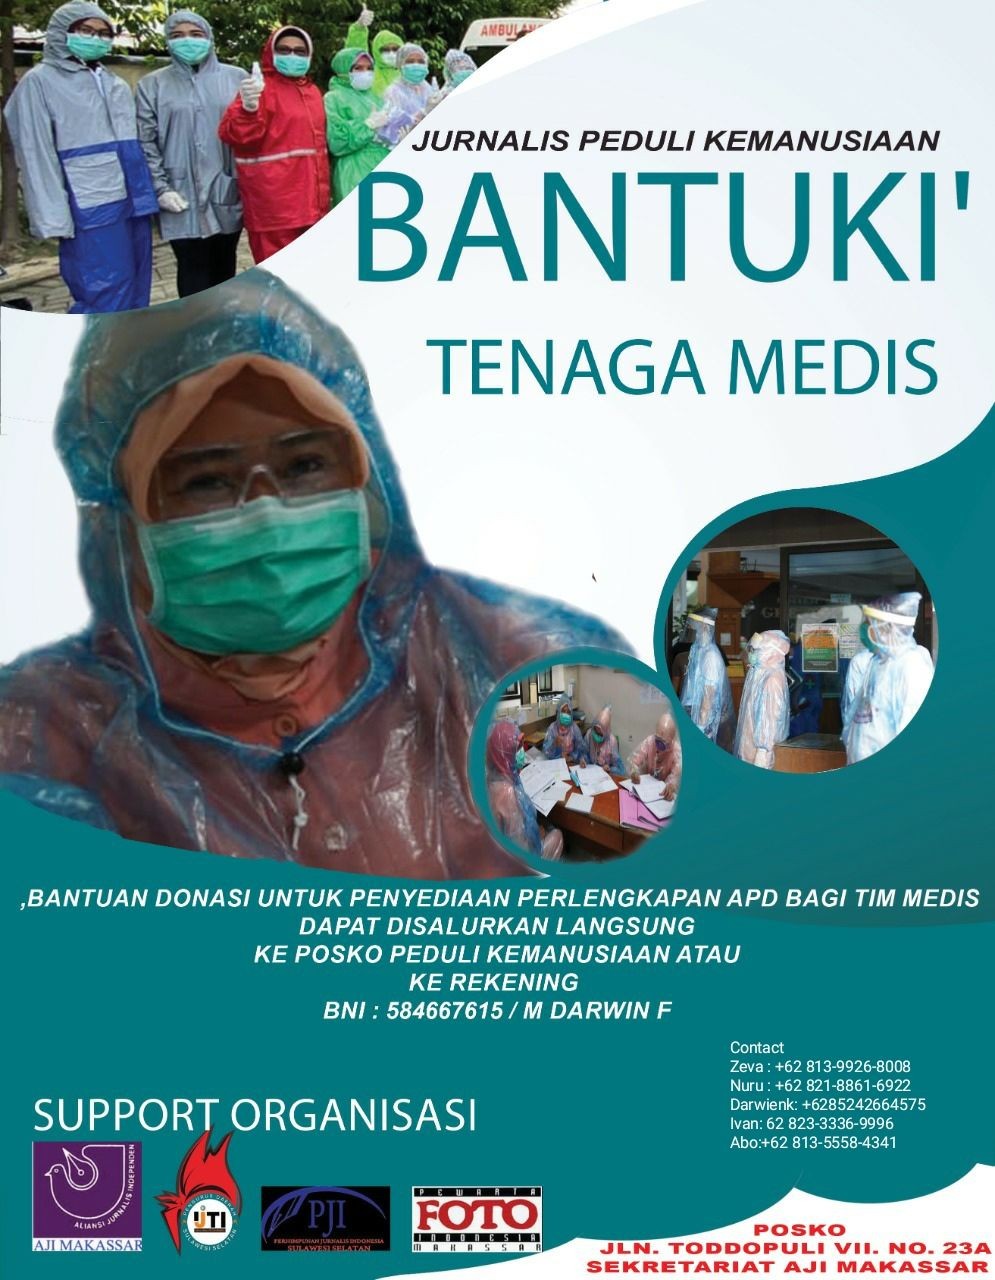 Bocah di Makassar Bongkar Celengan untuk Donasi Bantu APD Tenaga Medis